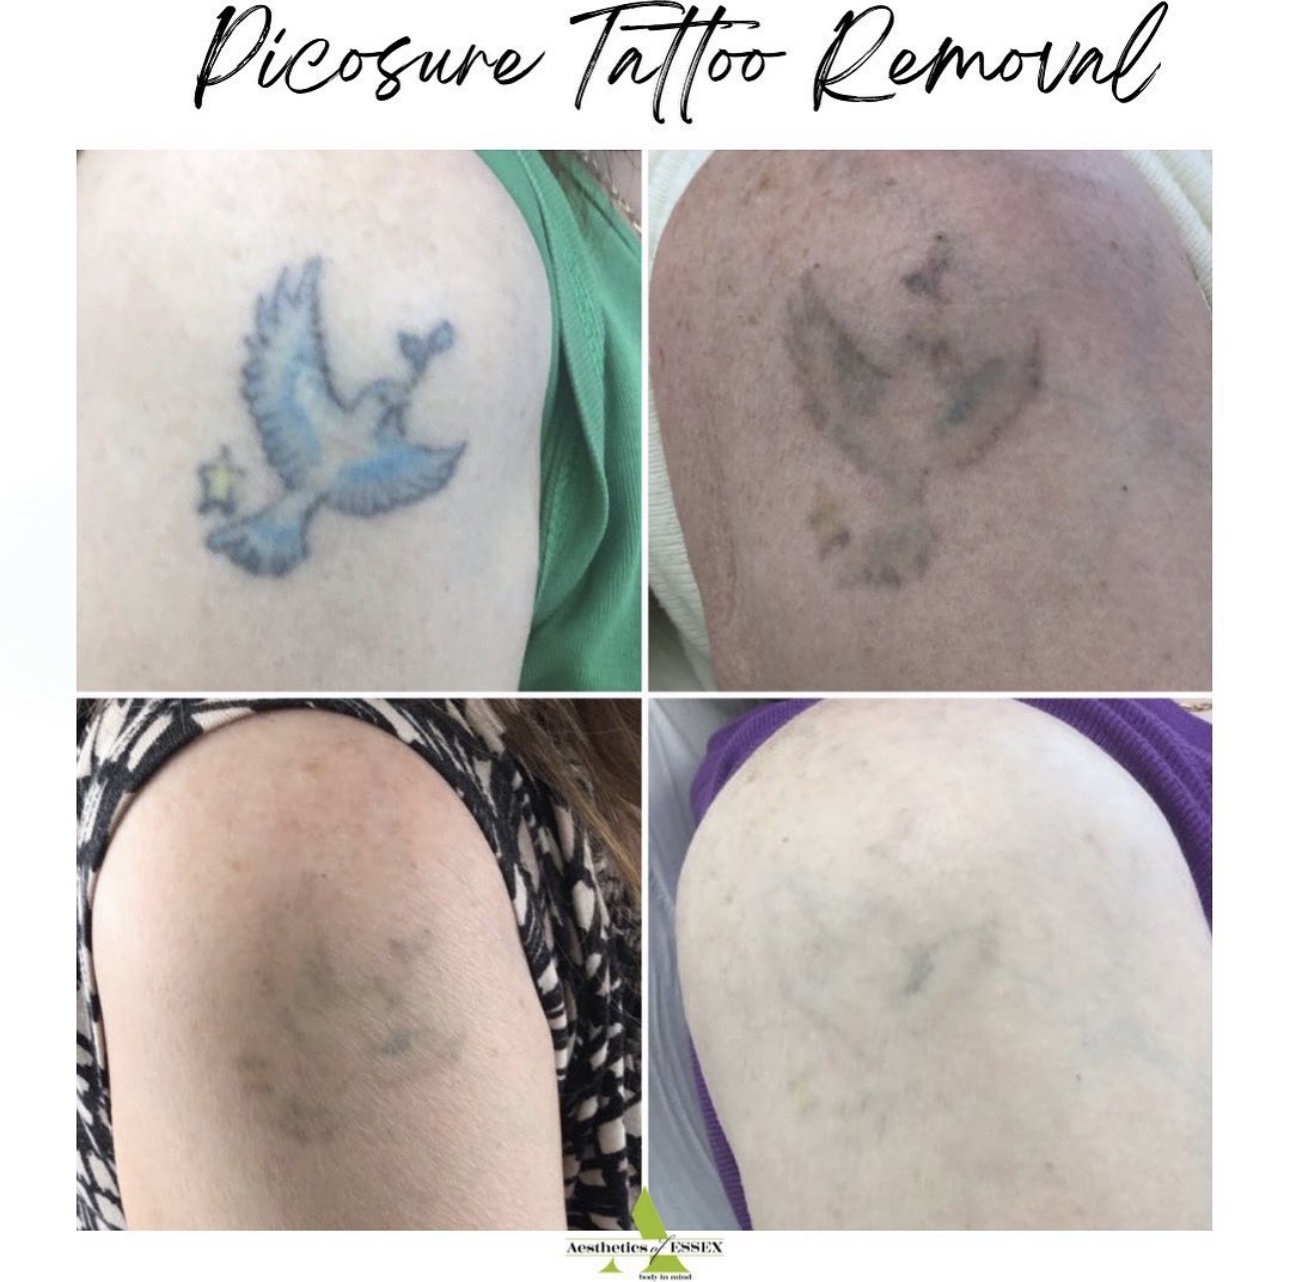 Tattoo-Removal Cream | POPSUGAR Tech